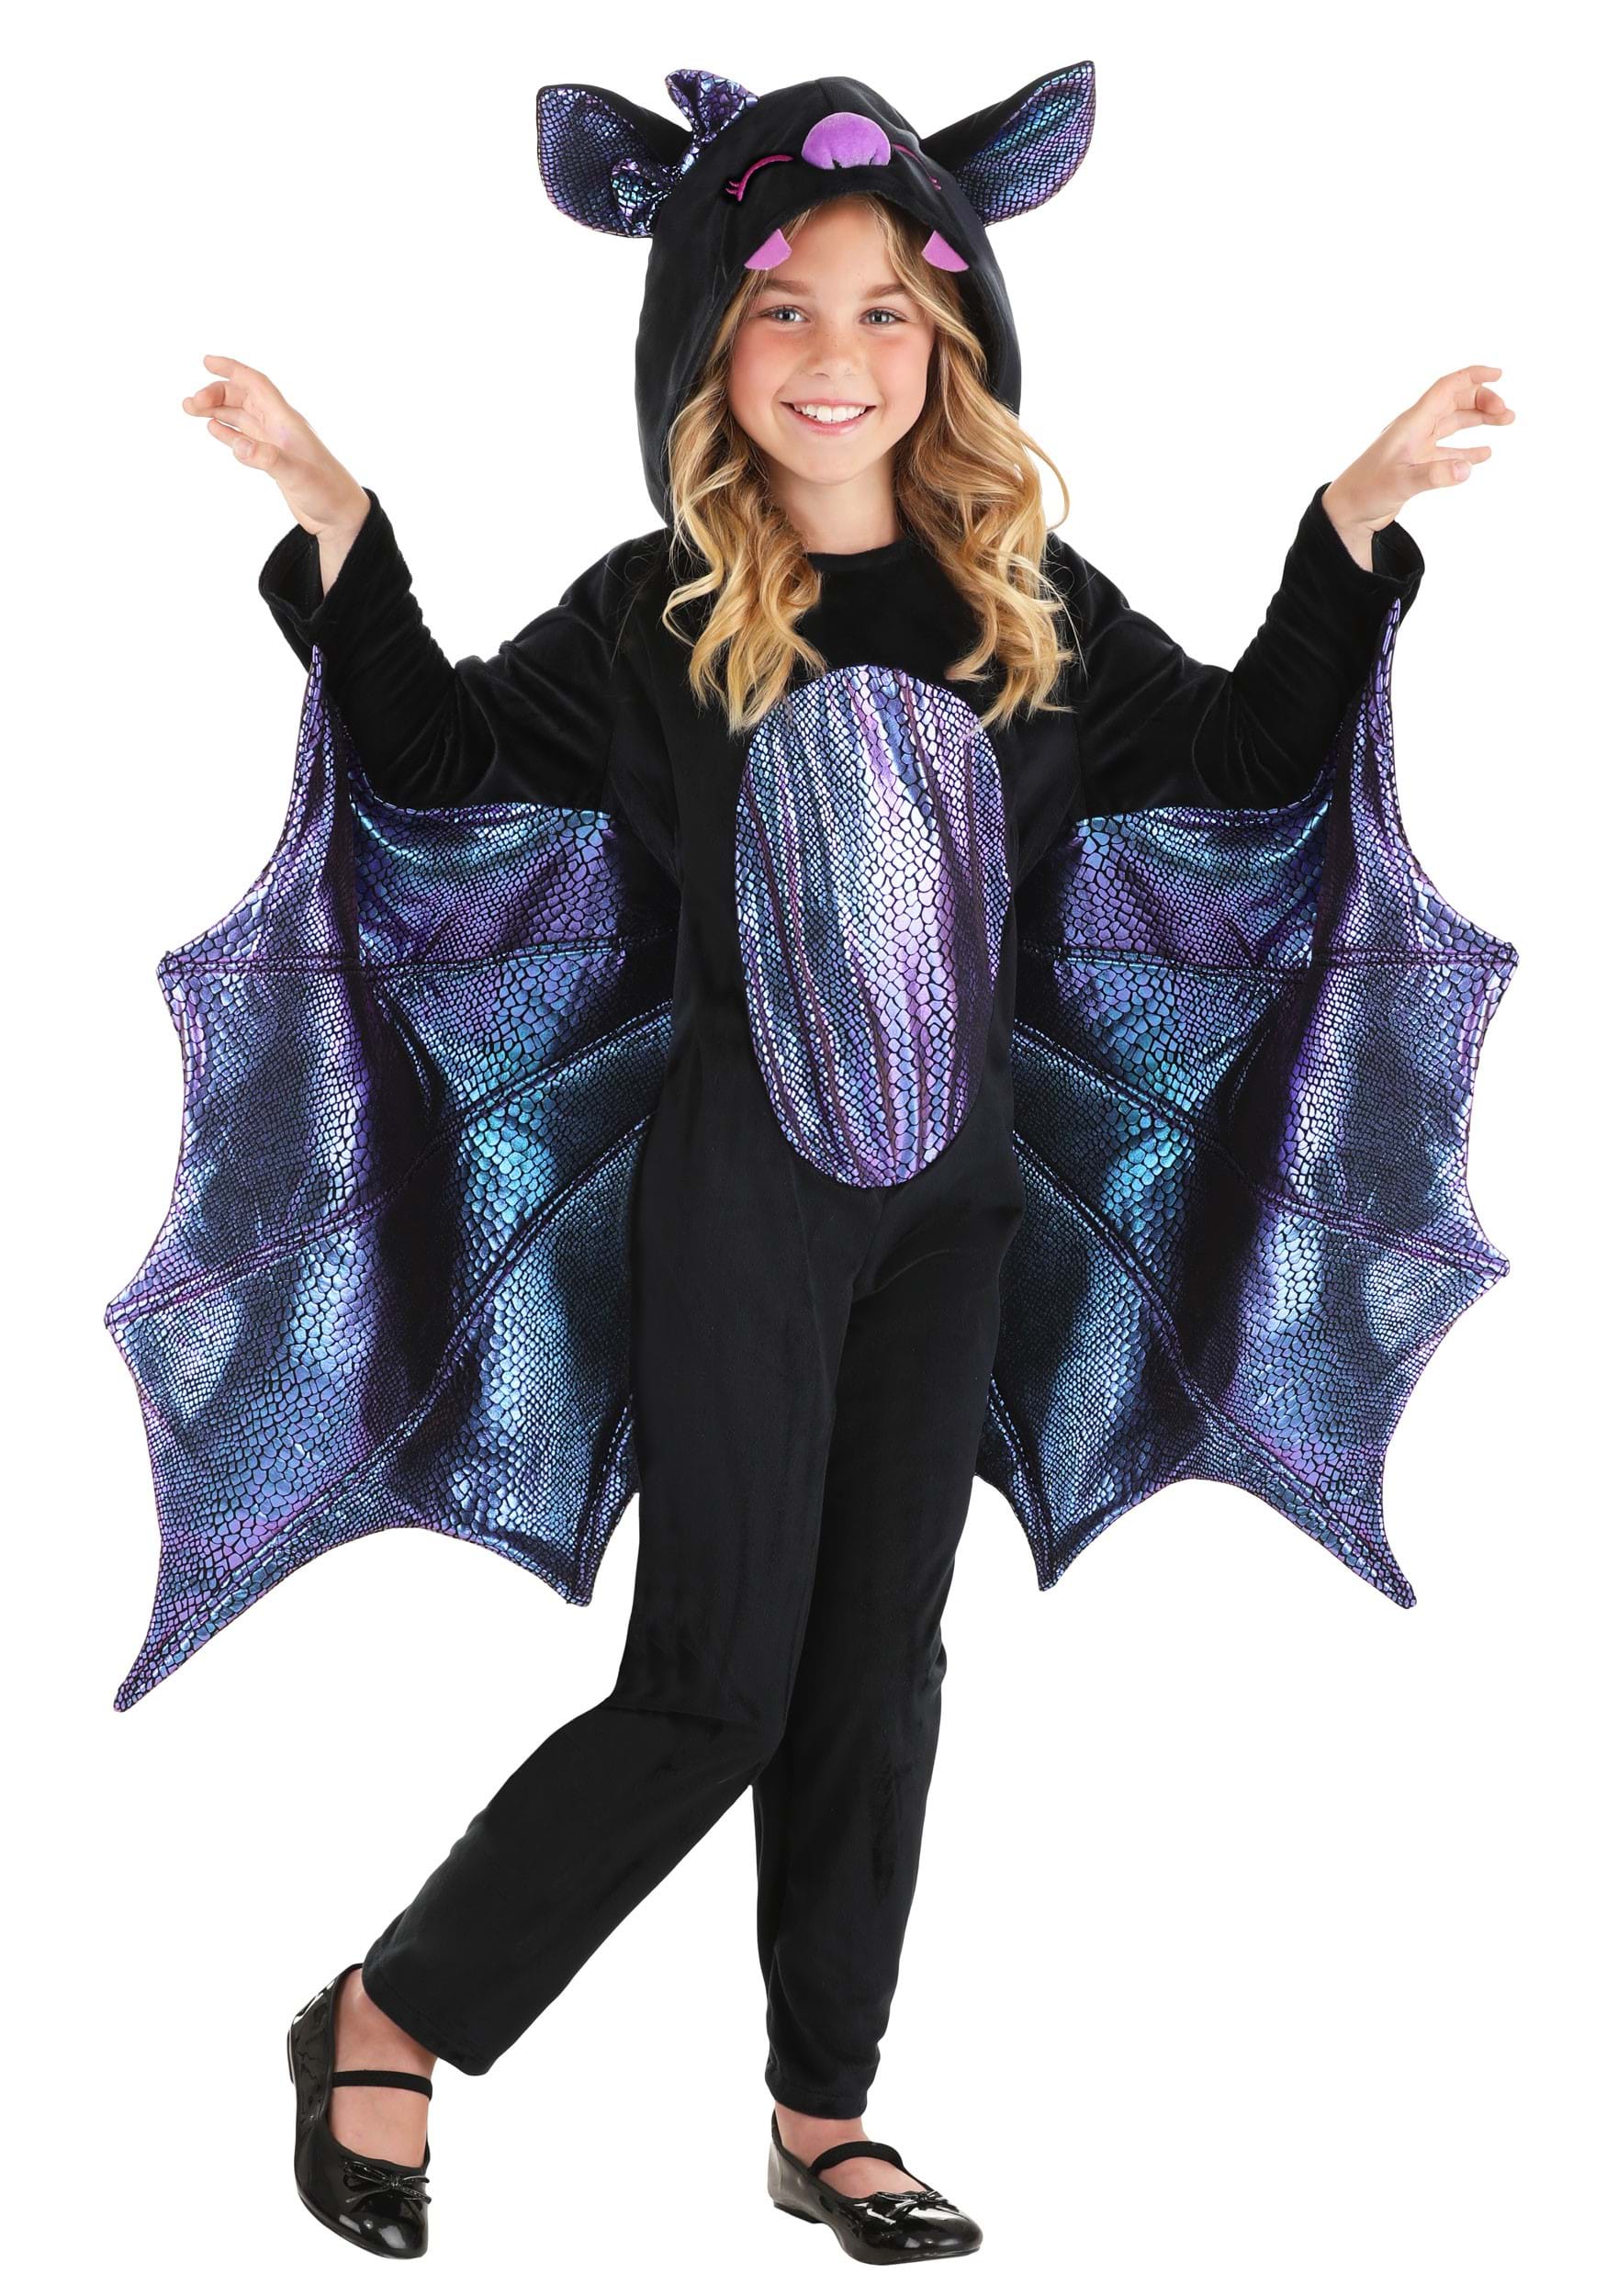 Photos - Fancy Dress FUN Costumes Shiny Bat Costume for Kids Black/Blue/Purple FUN2822C